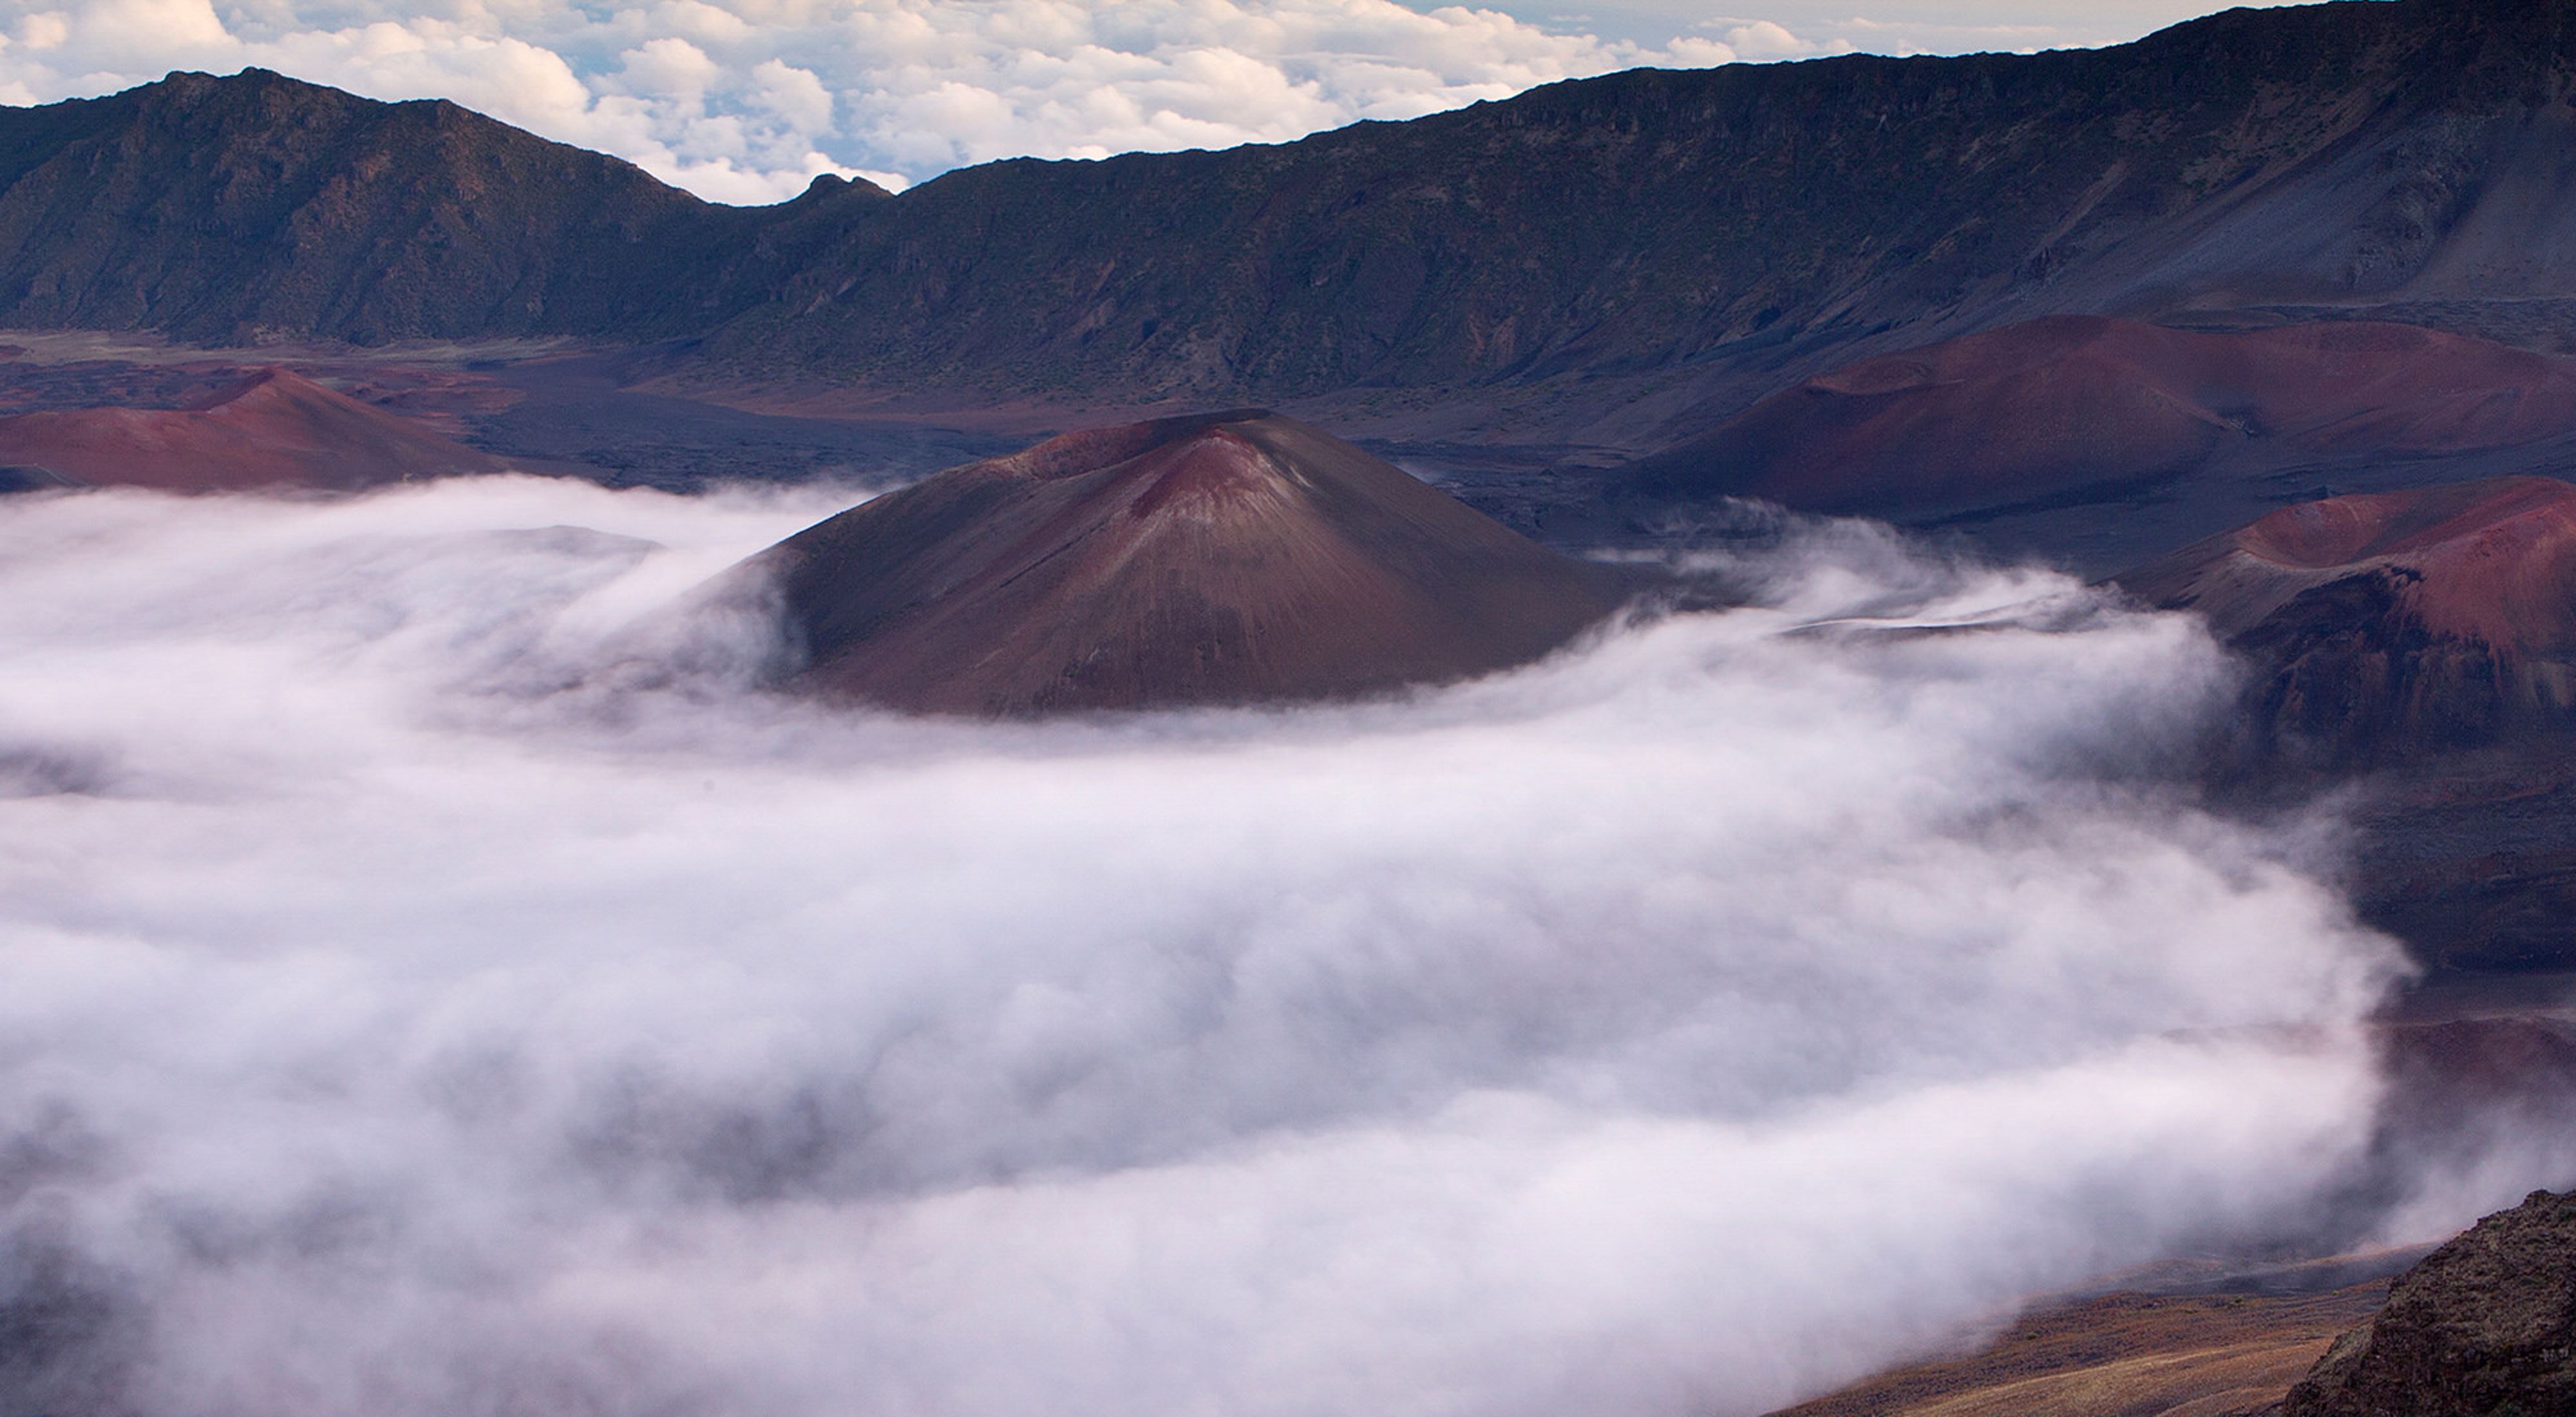 Crater at Haleakala National Park on Maui, Hawaii.